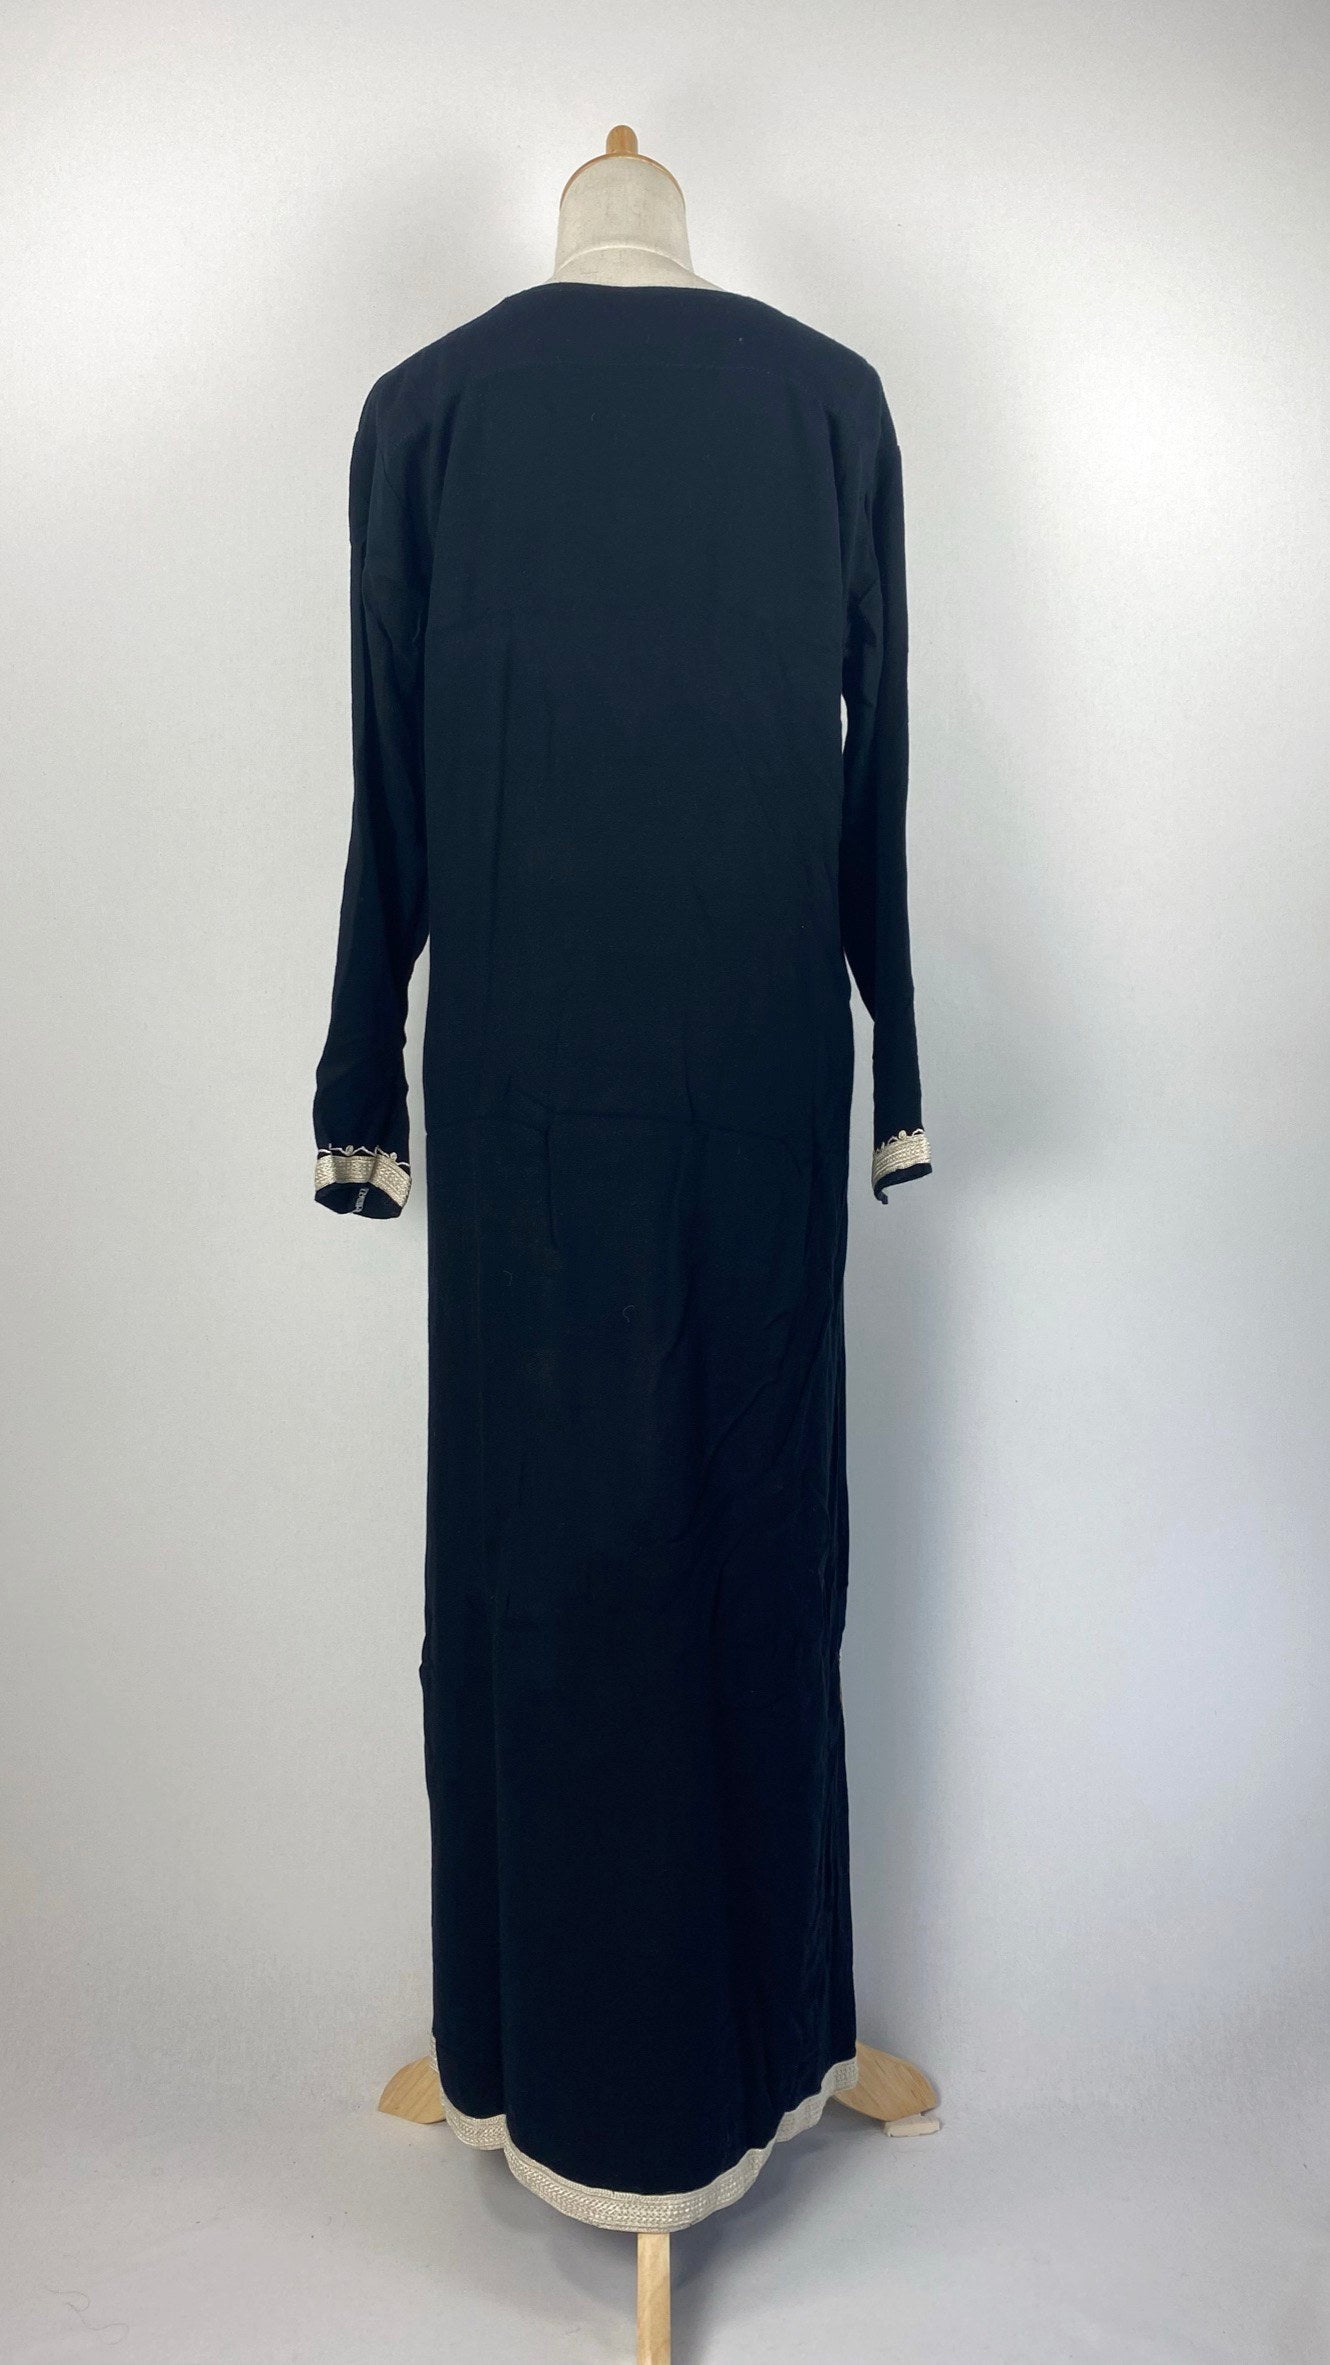 Long Sleeve Moroccan Abaya with Trim, Black